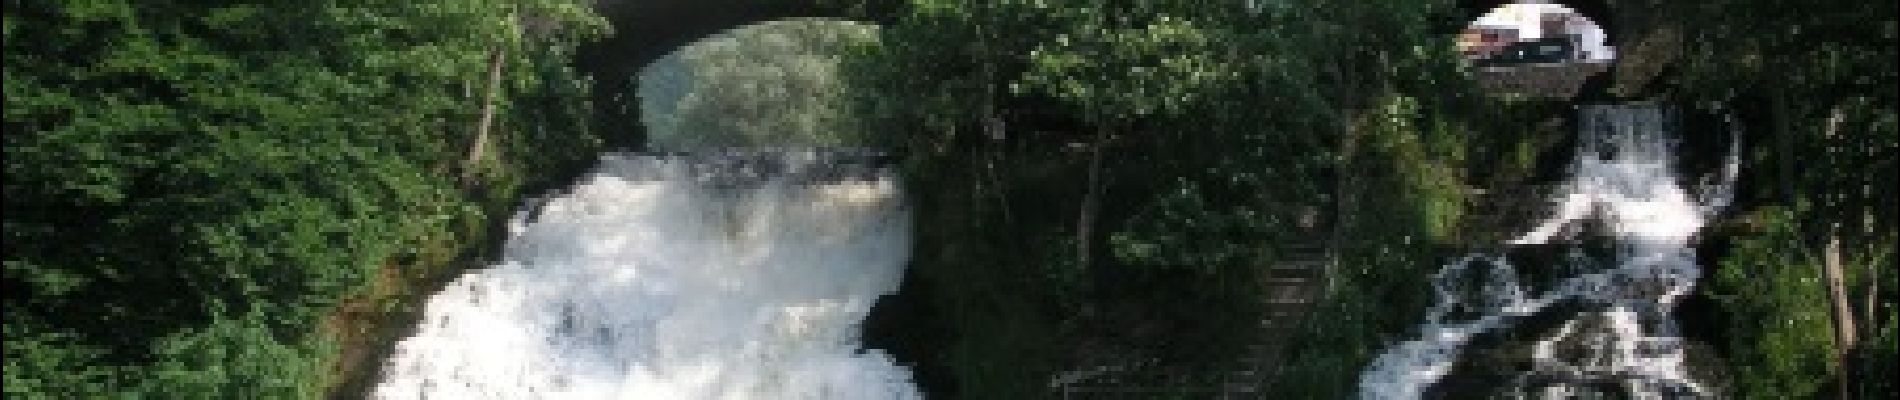 POI Stavelot - Watervallen van Coo - Photo